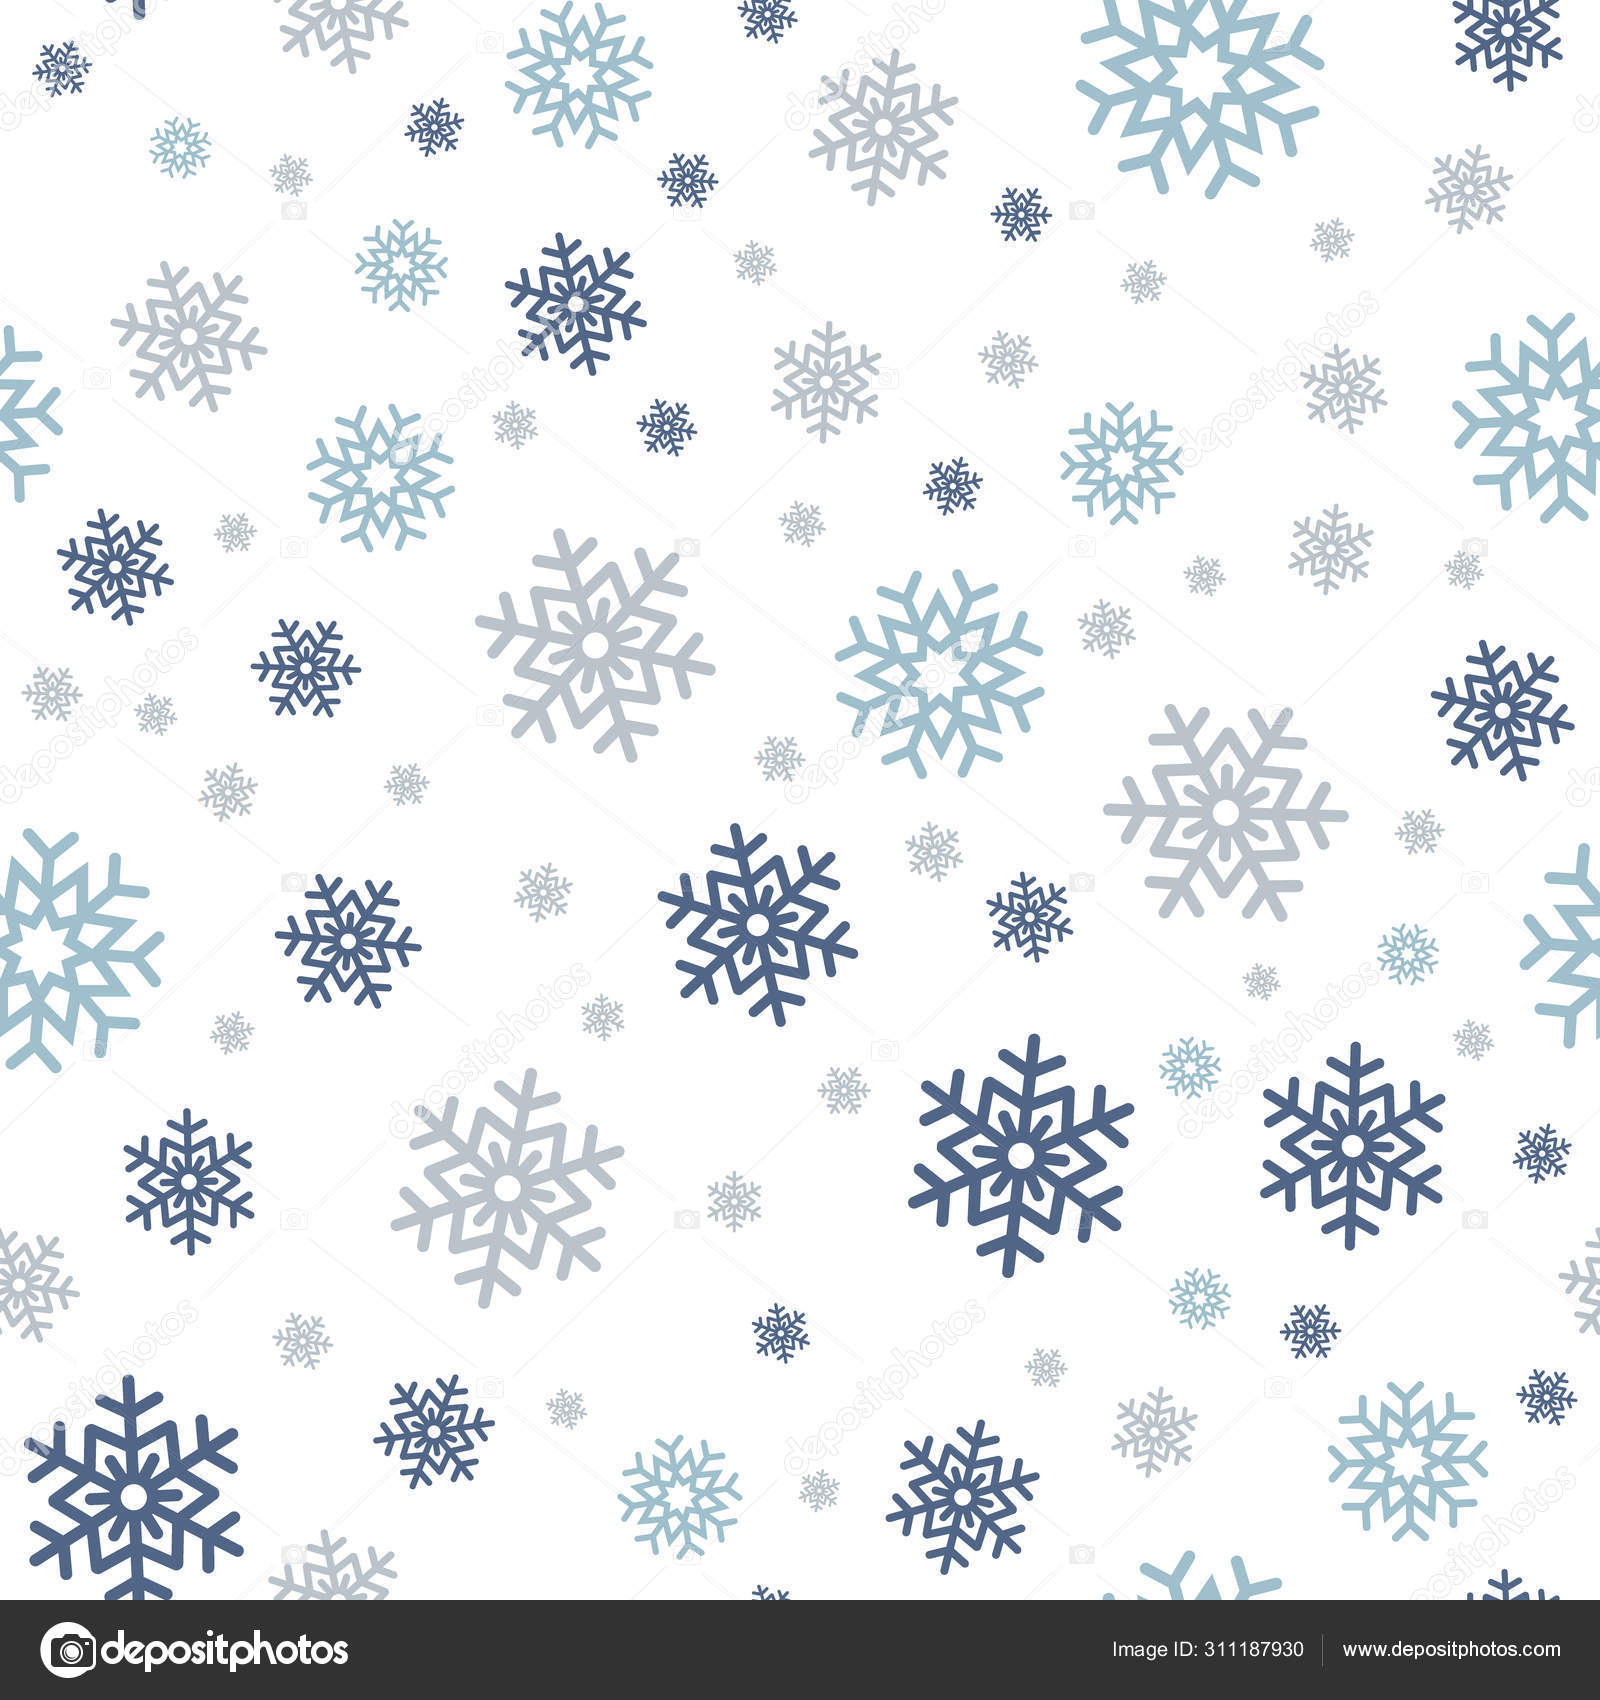 Free Stock Photo of Snow Flakes Background Shows Seasonal Wallpaper Or Snow  Pattern